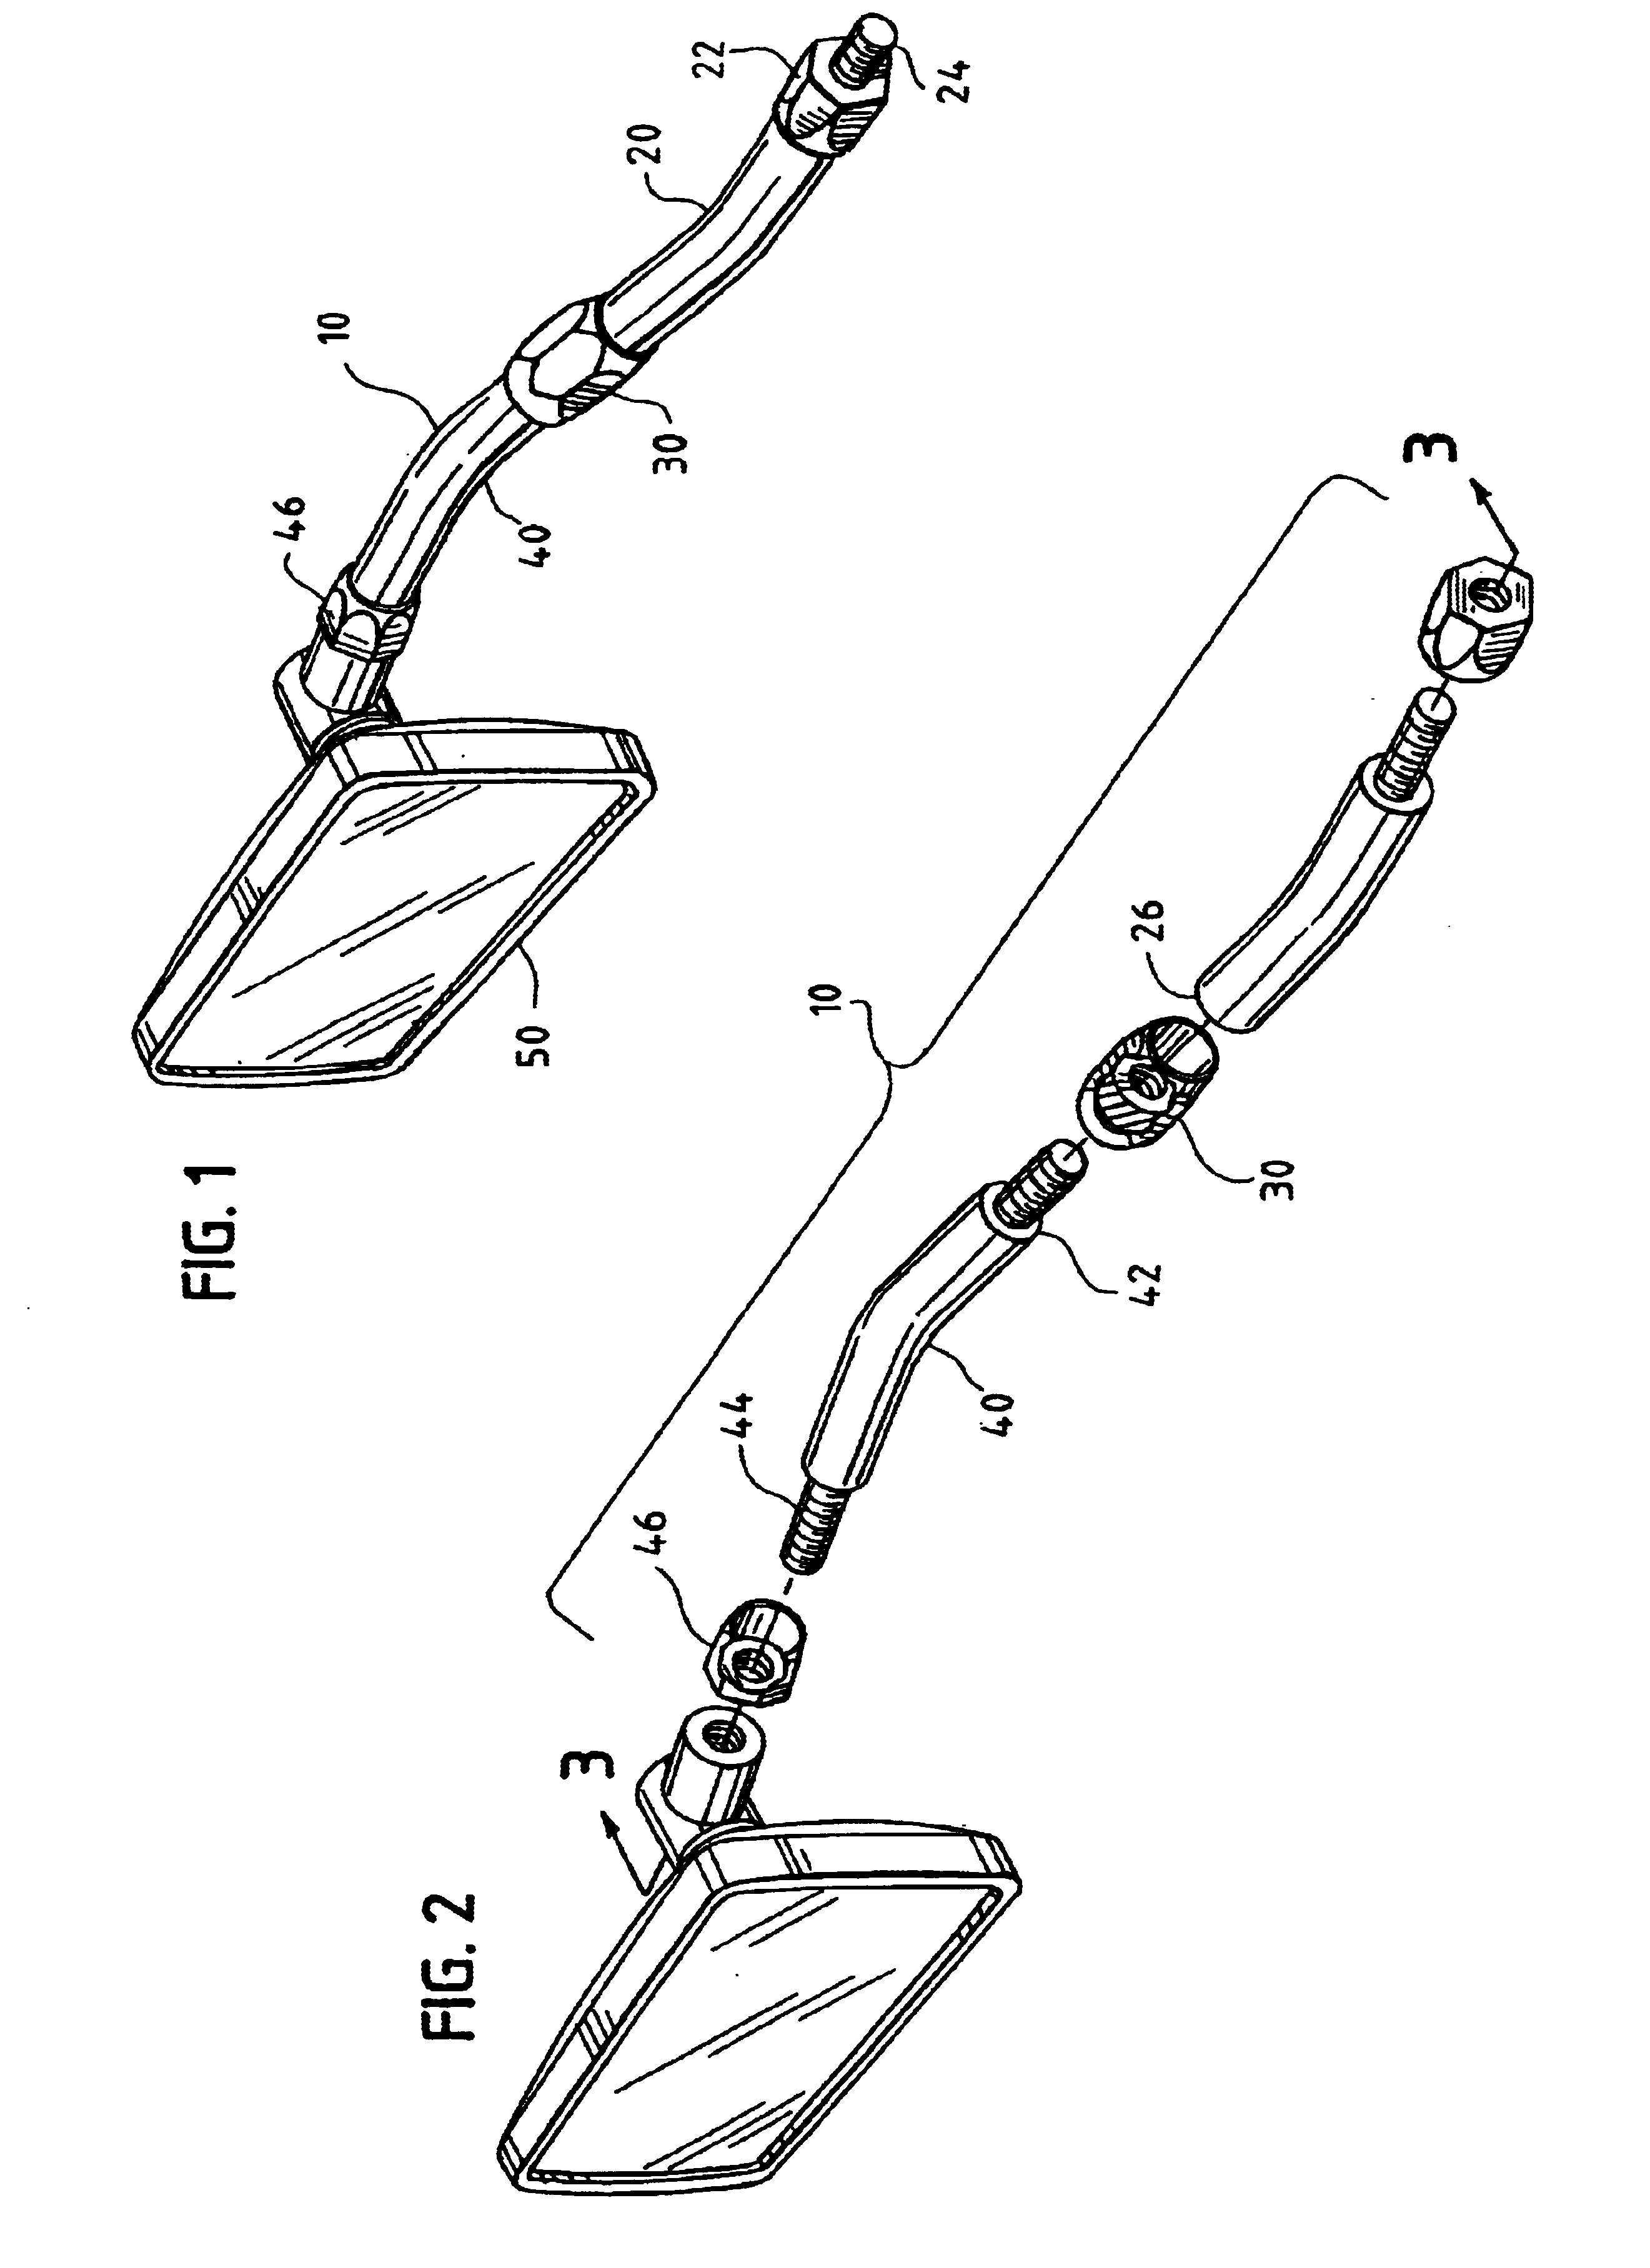 Adjustable vehicle attachment stem